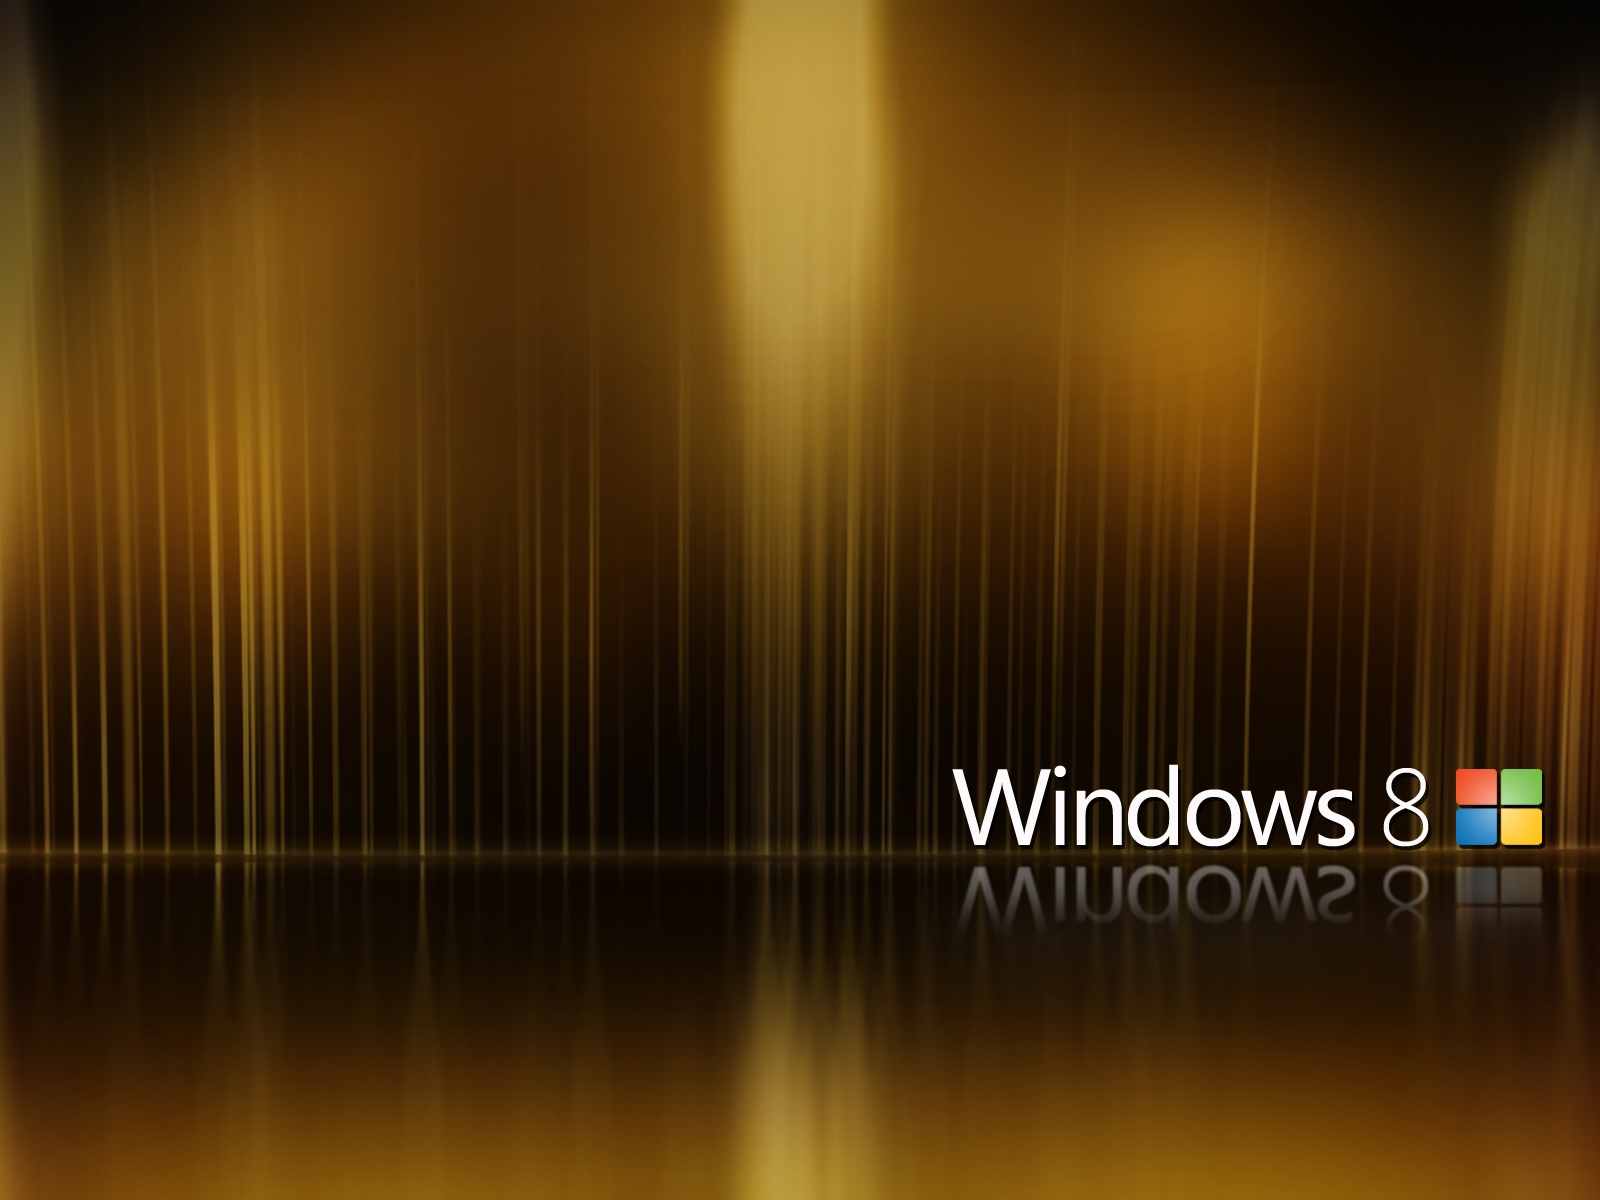 Fantastic Windows 8 for 1600 x 1200 resolution